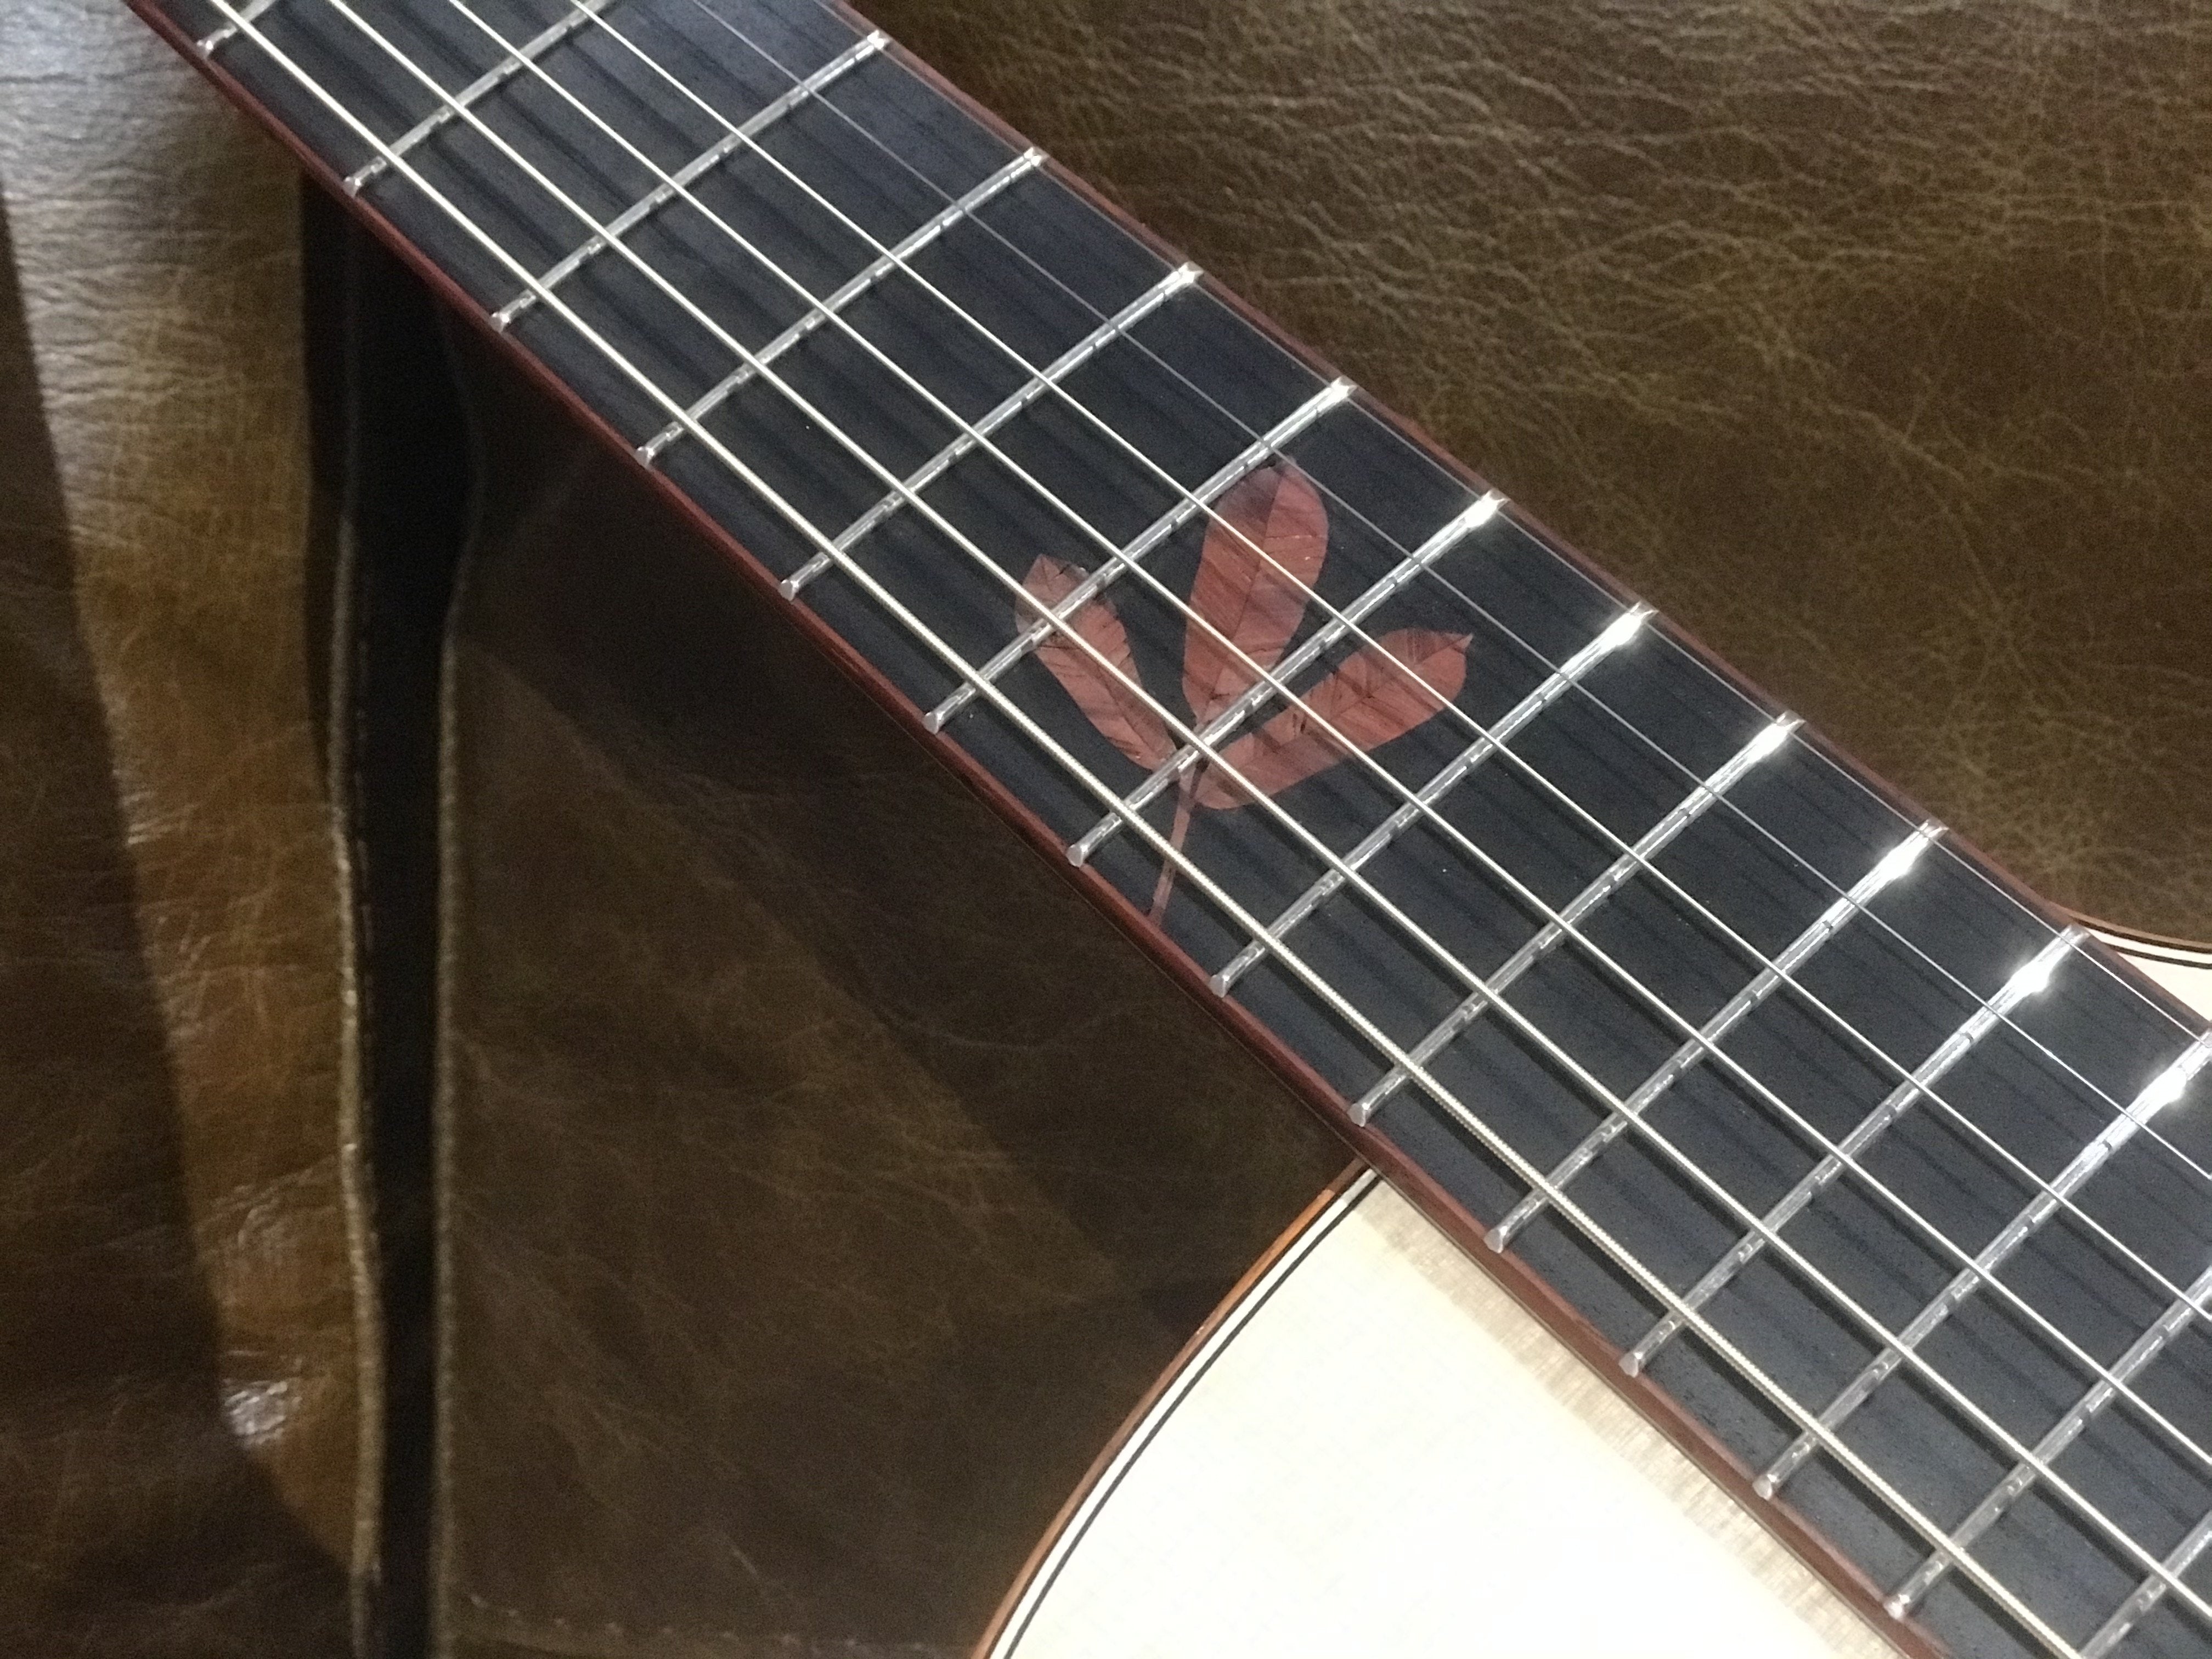 Dowina STRIP PADAUK GAC, Acoustic Guitar for sale at Richards Guitars.